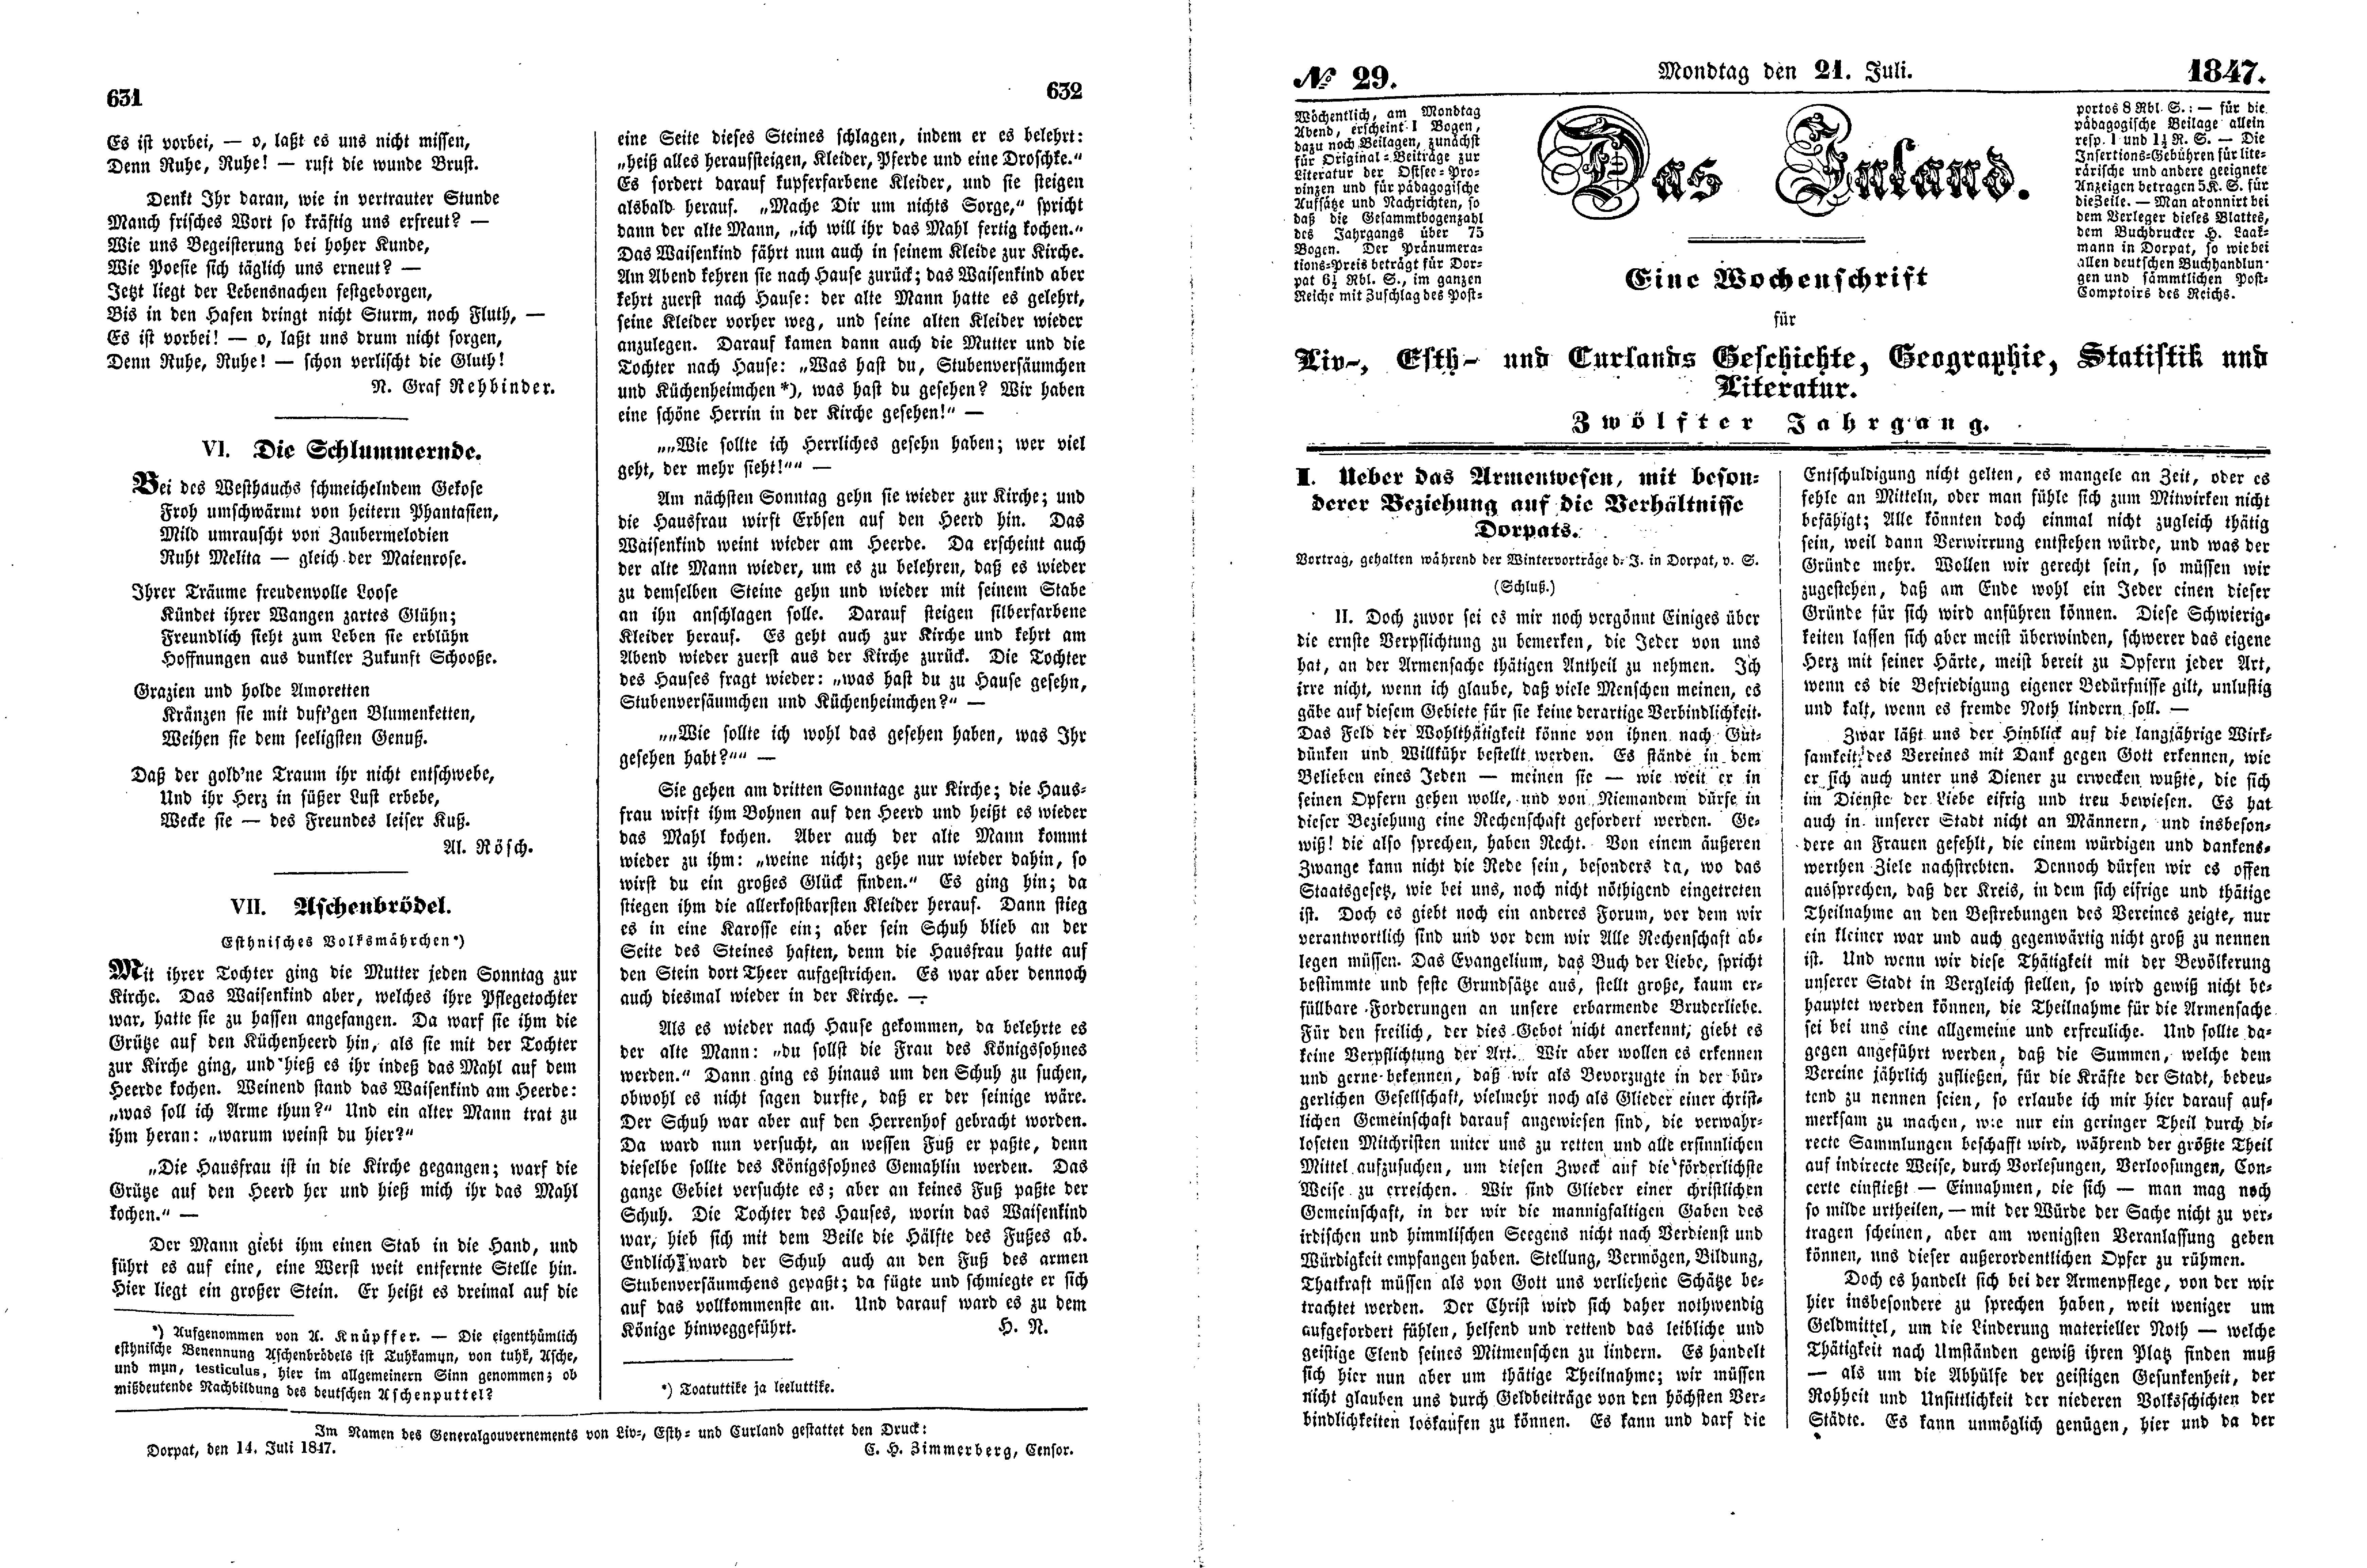 Das Inland [12] (1847) | 163. (631-634) Main body of text